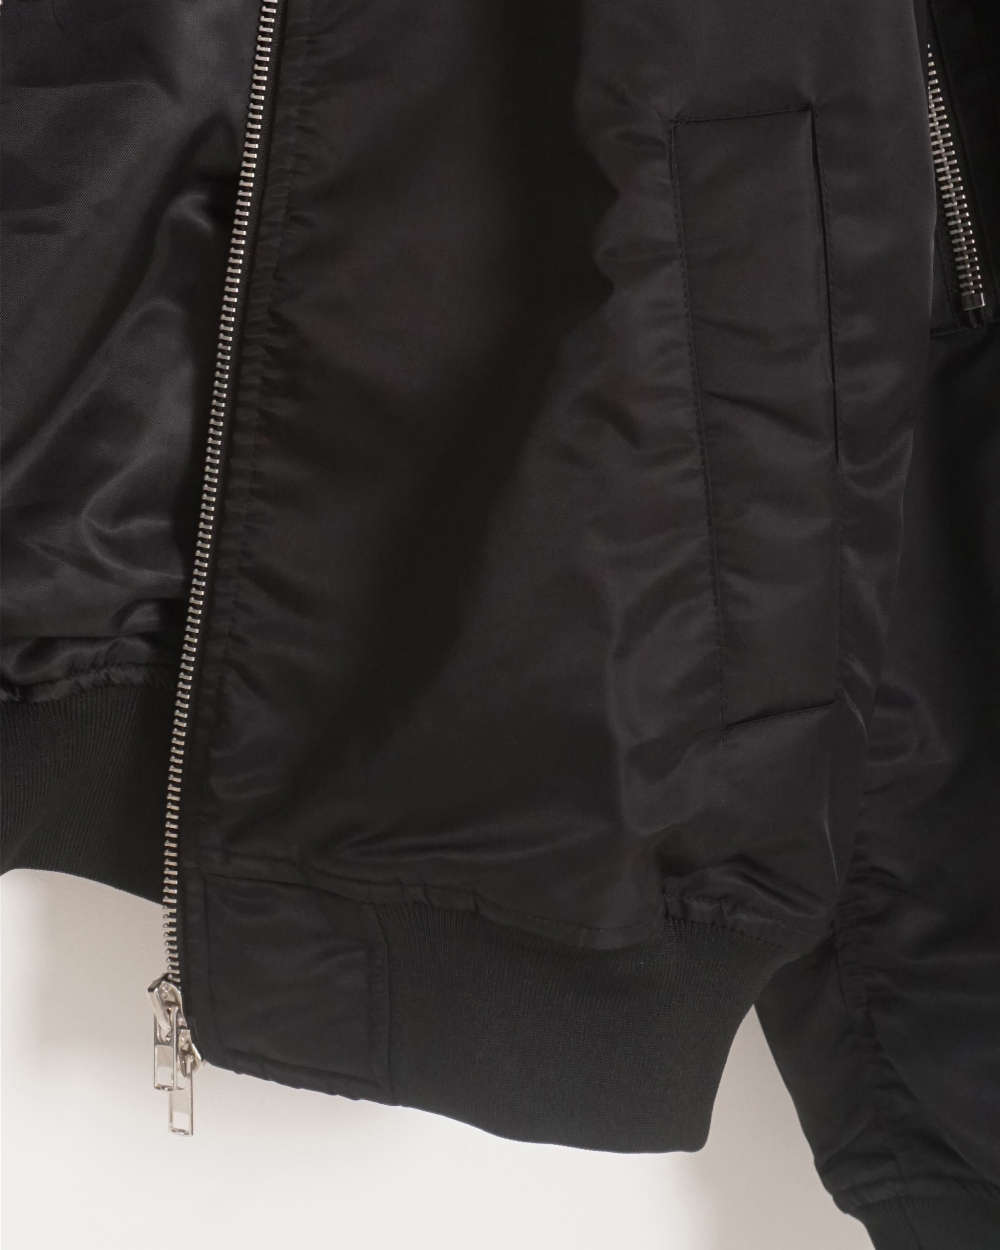 jacket detail image-S1L49